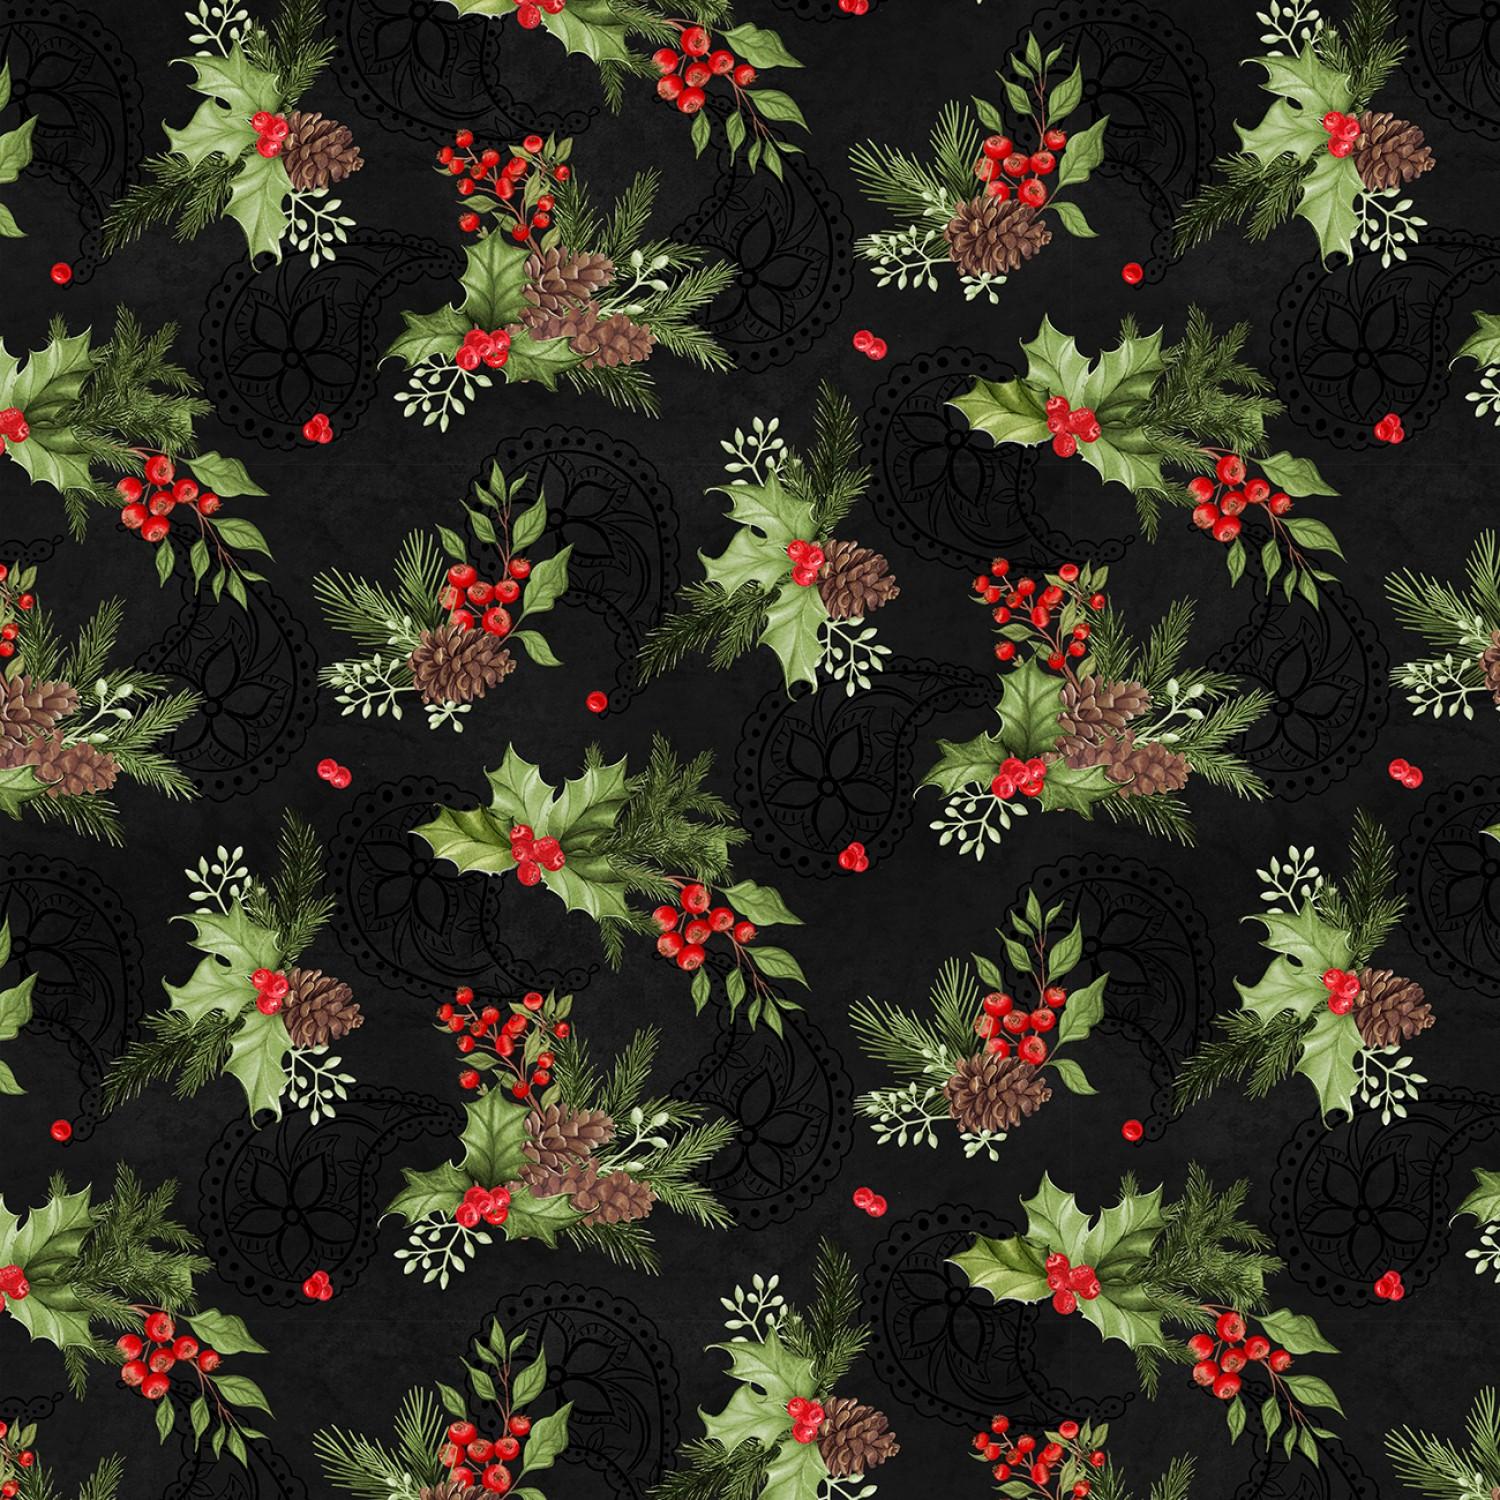 Tartan Holiday - Foliage Toss Black - 27667-973